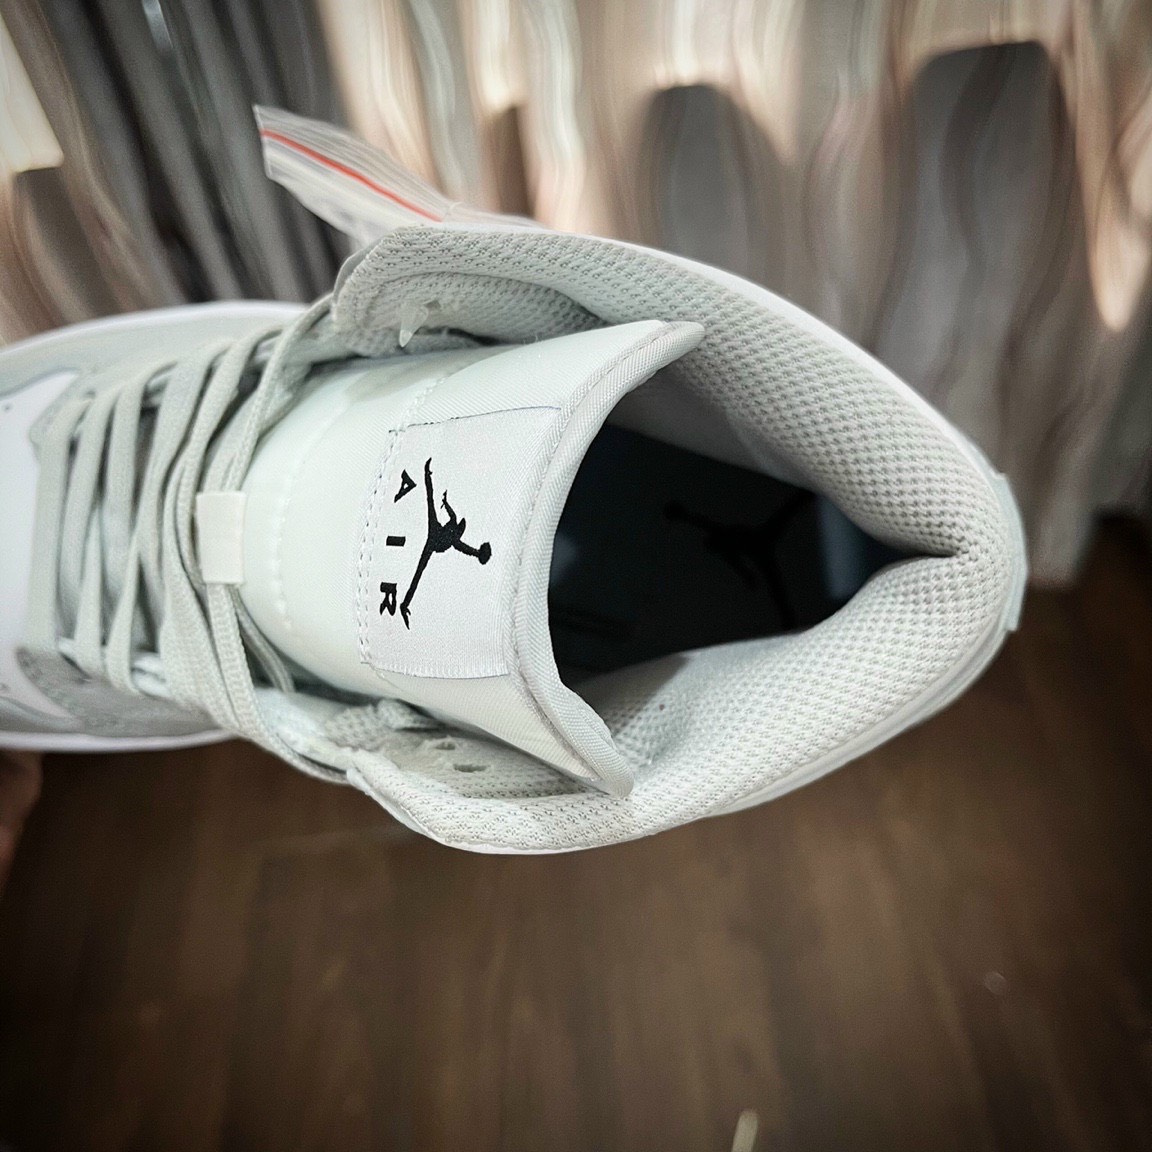 Nike Air Jordan 1 Mid Grey Camo Like Auth